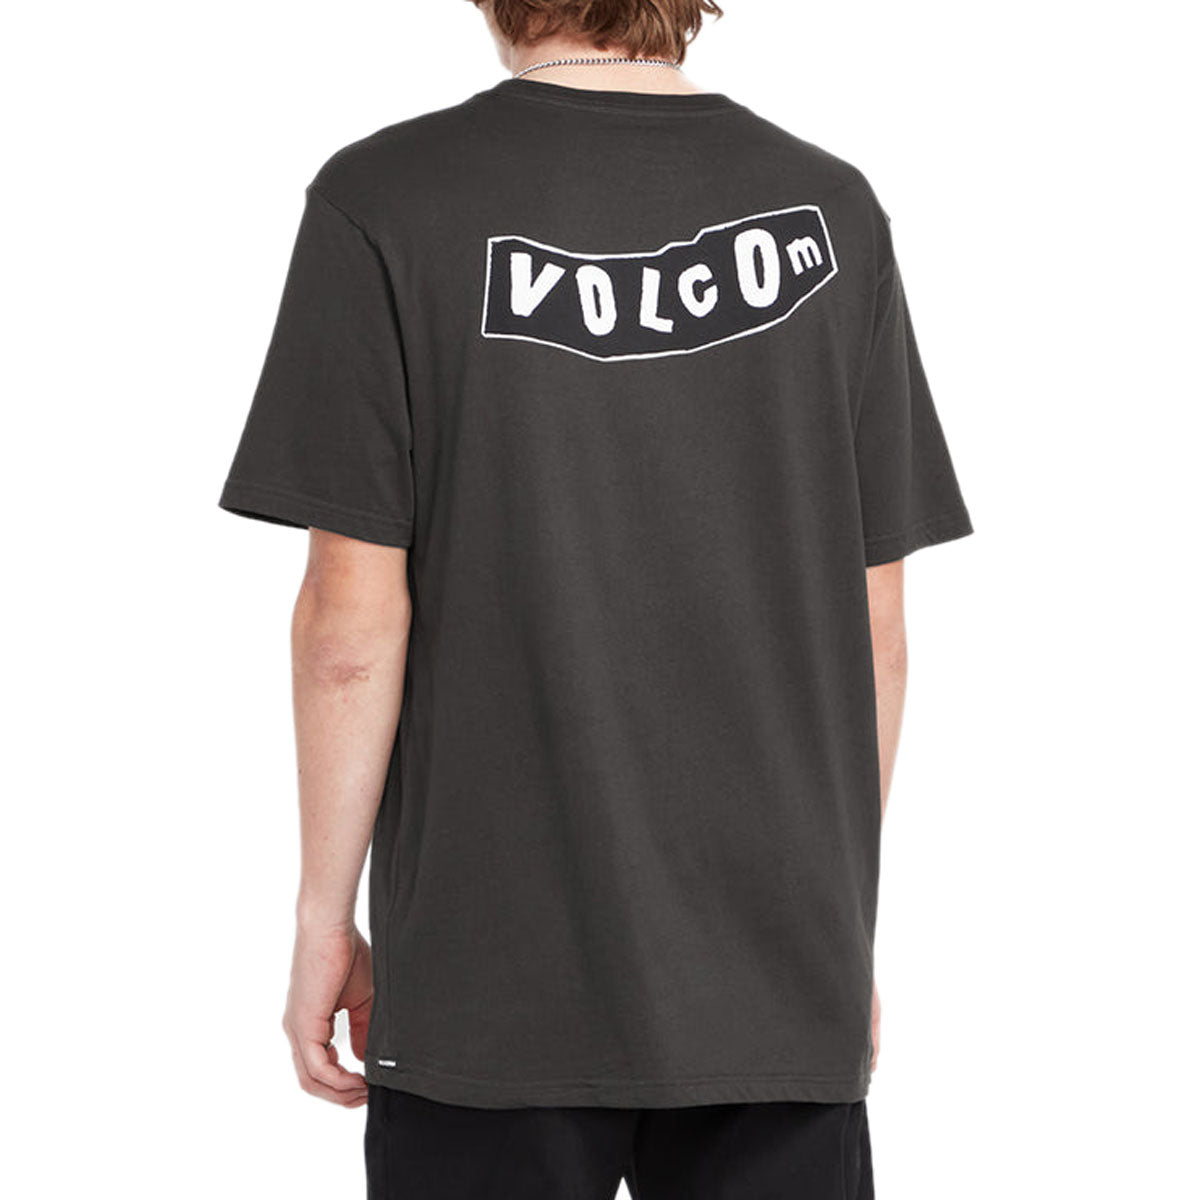 Volcom Skate Vitals Originator T-Shirt - Vintage Black image 4